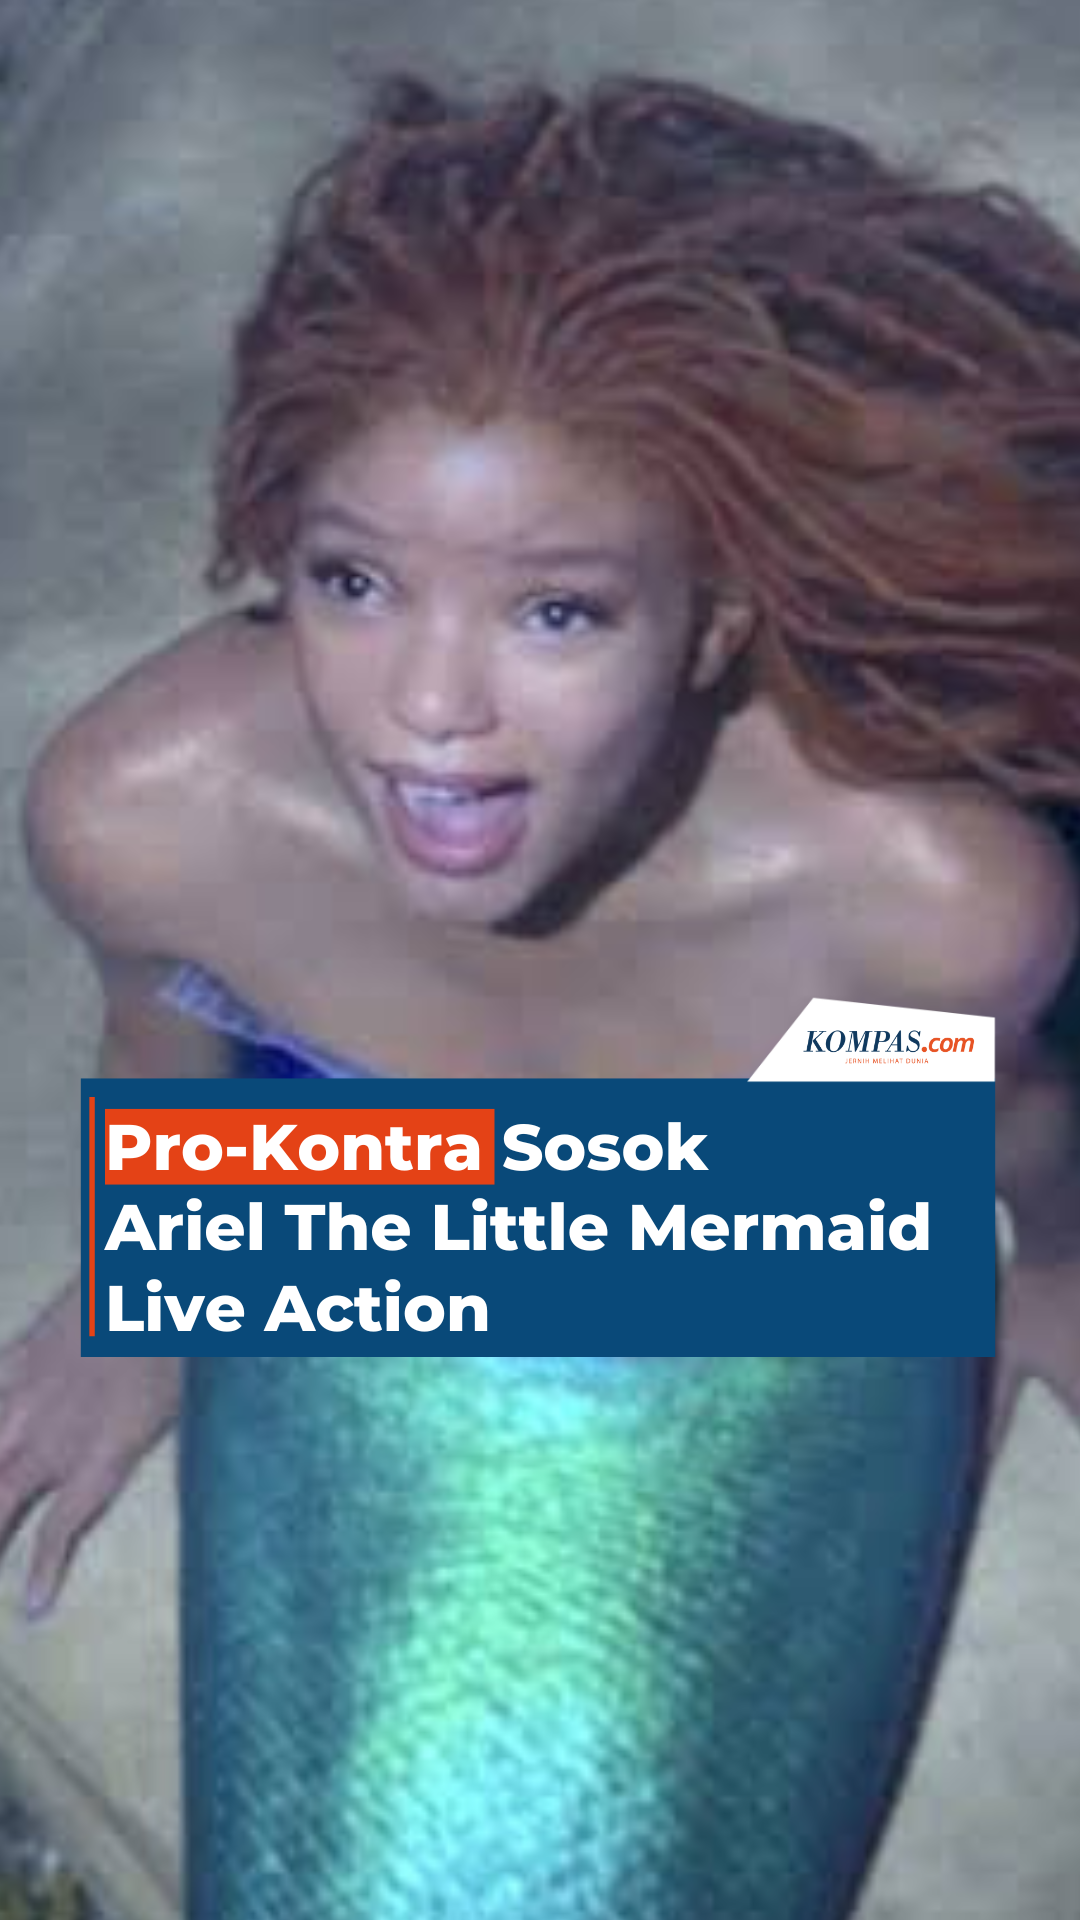 Pro-Kontra Sosok Ariel The Little Mermaid Live Action